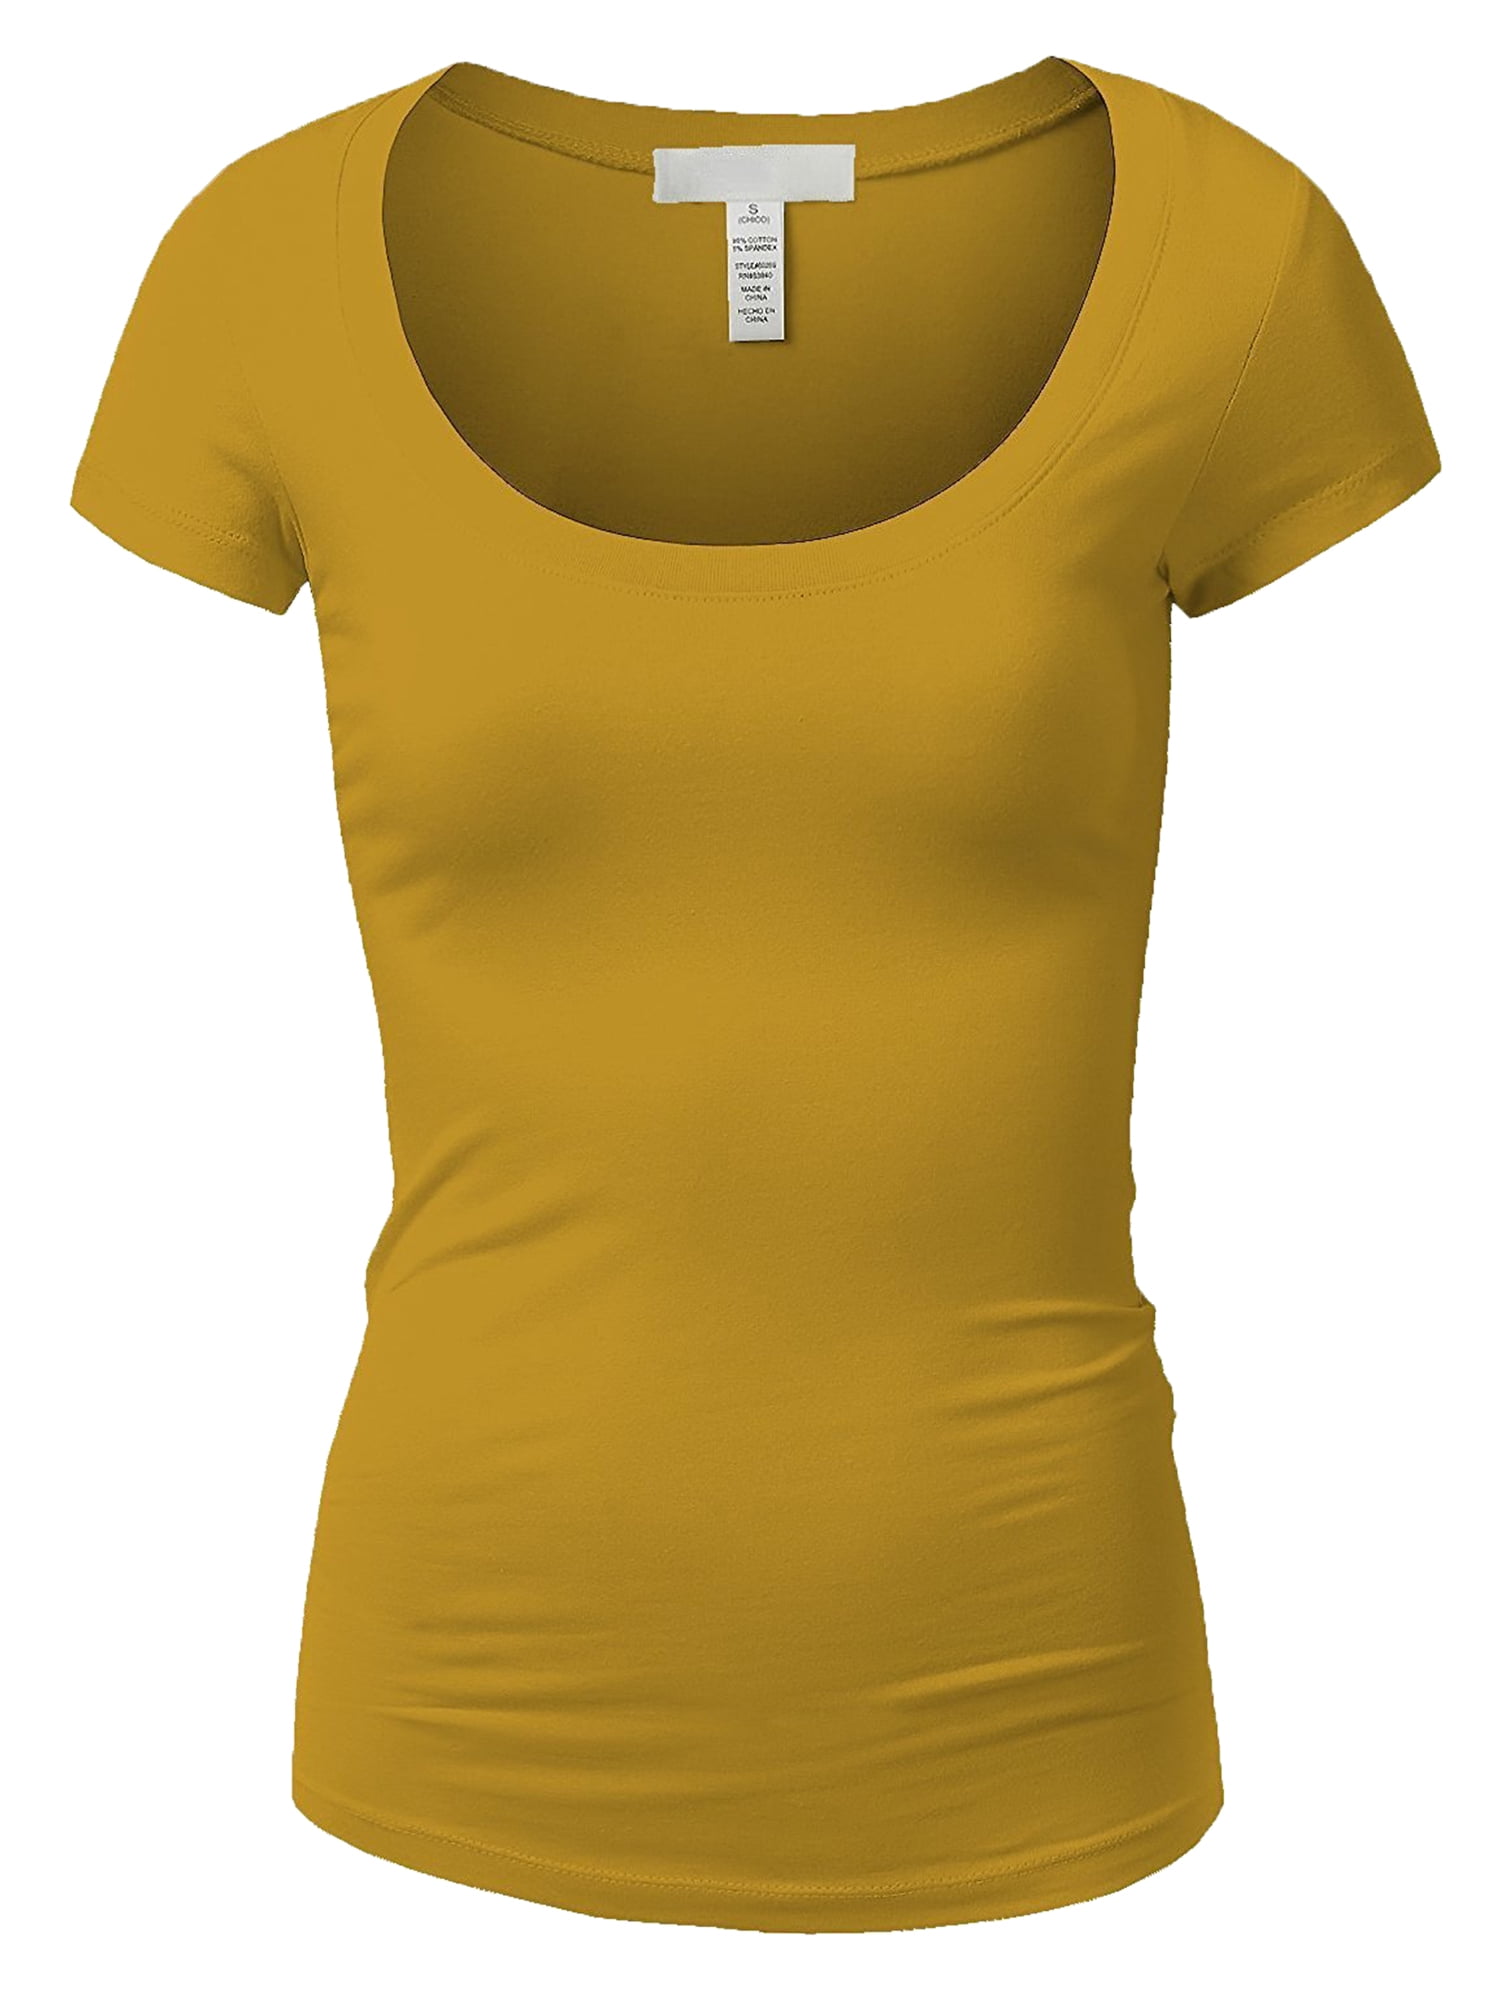 Essential Basic Scoop Neck Short Sleeve Tee For Women Tshirt Plus Mustard 2xl